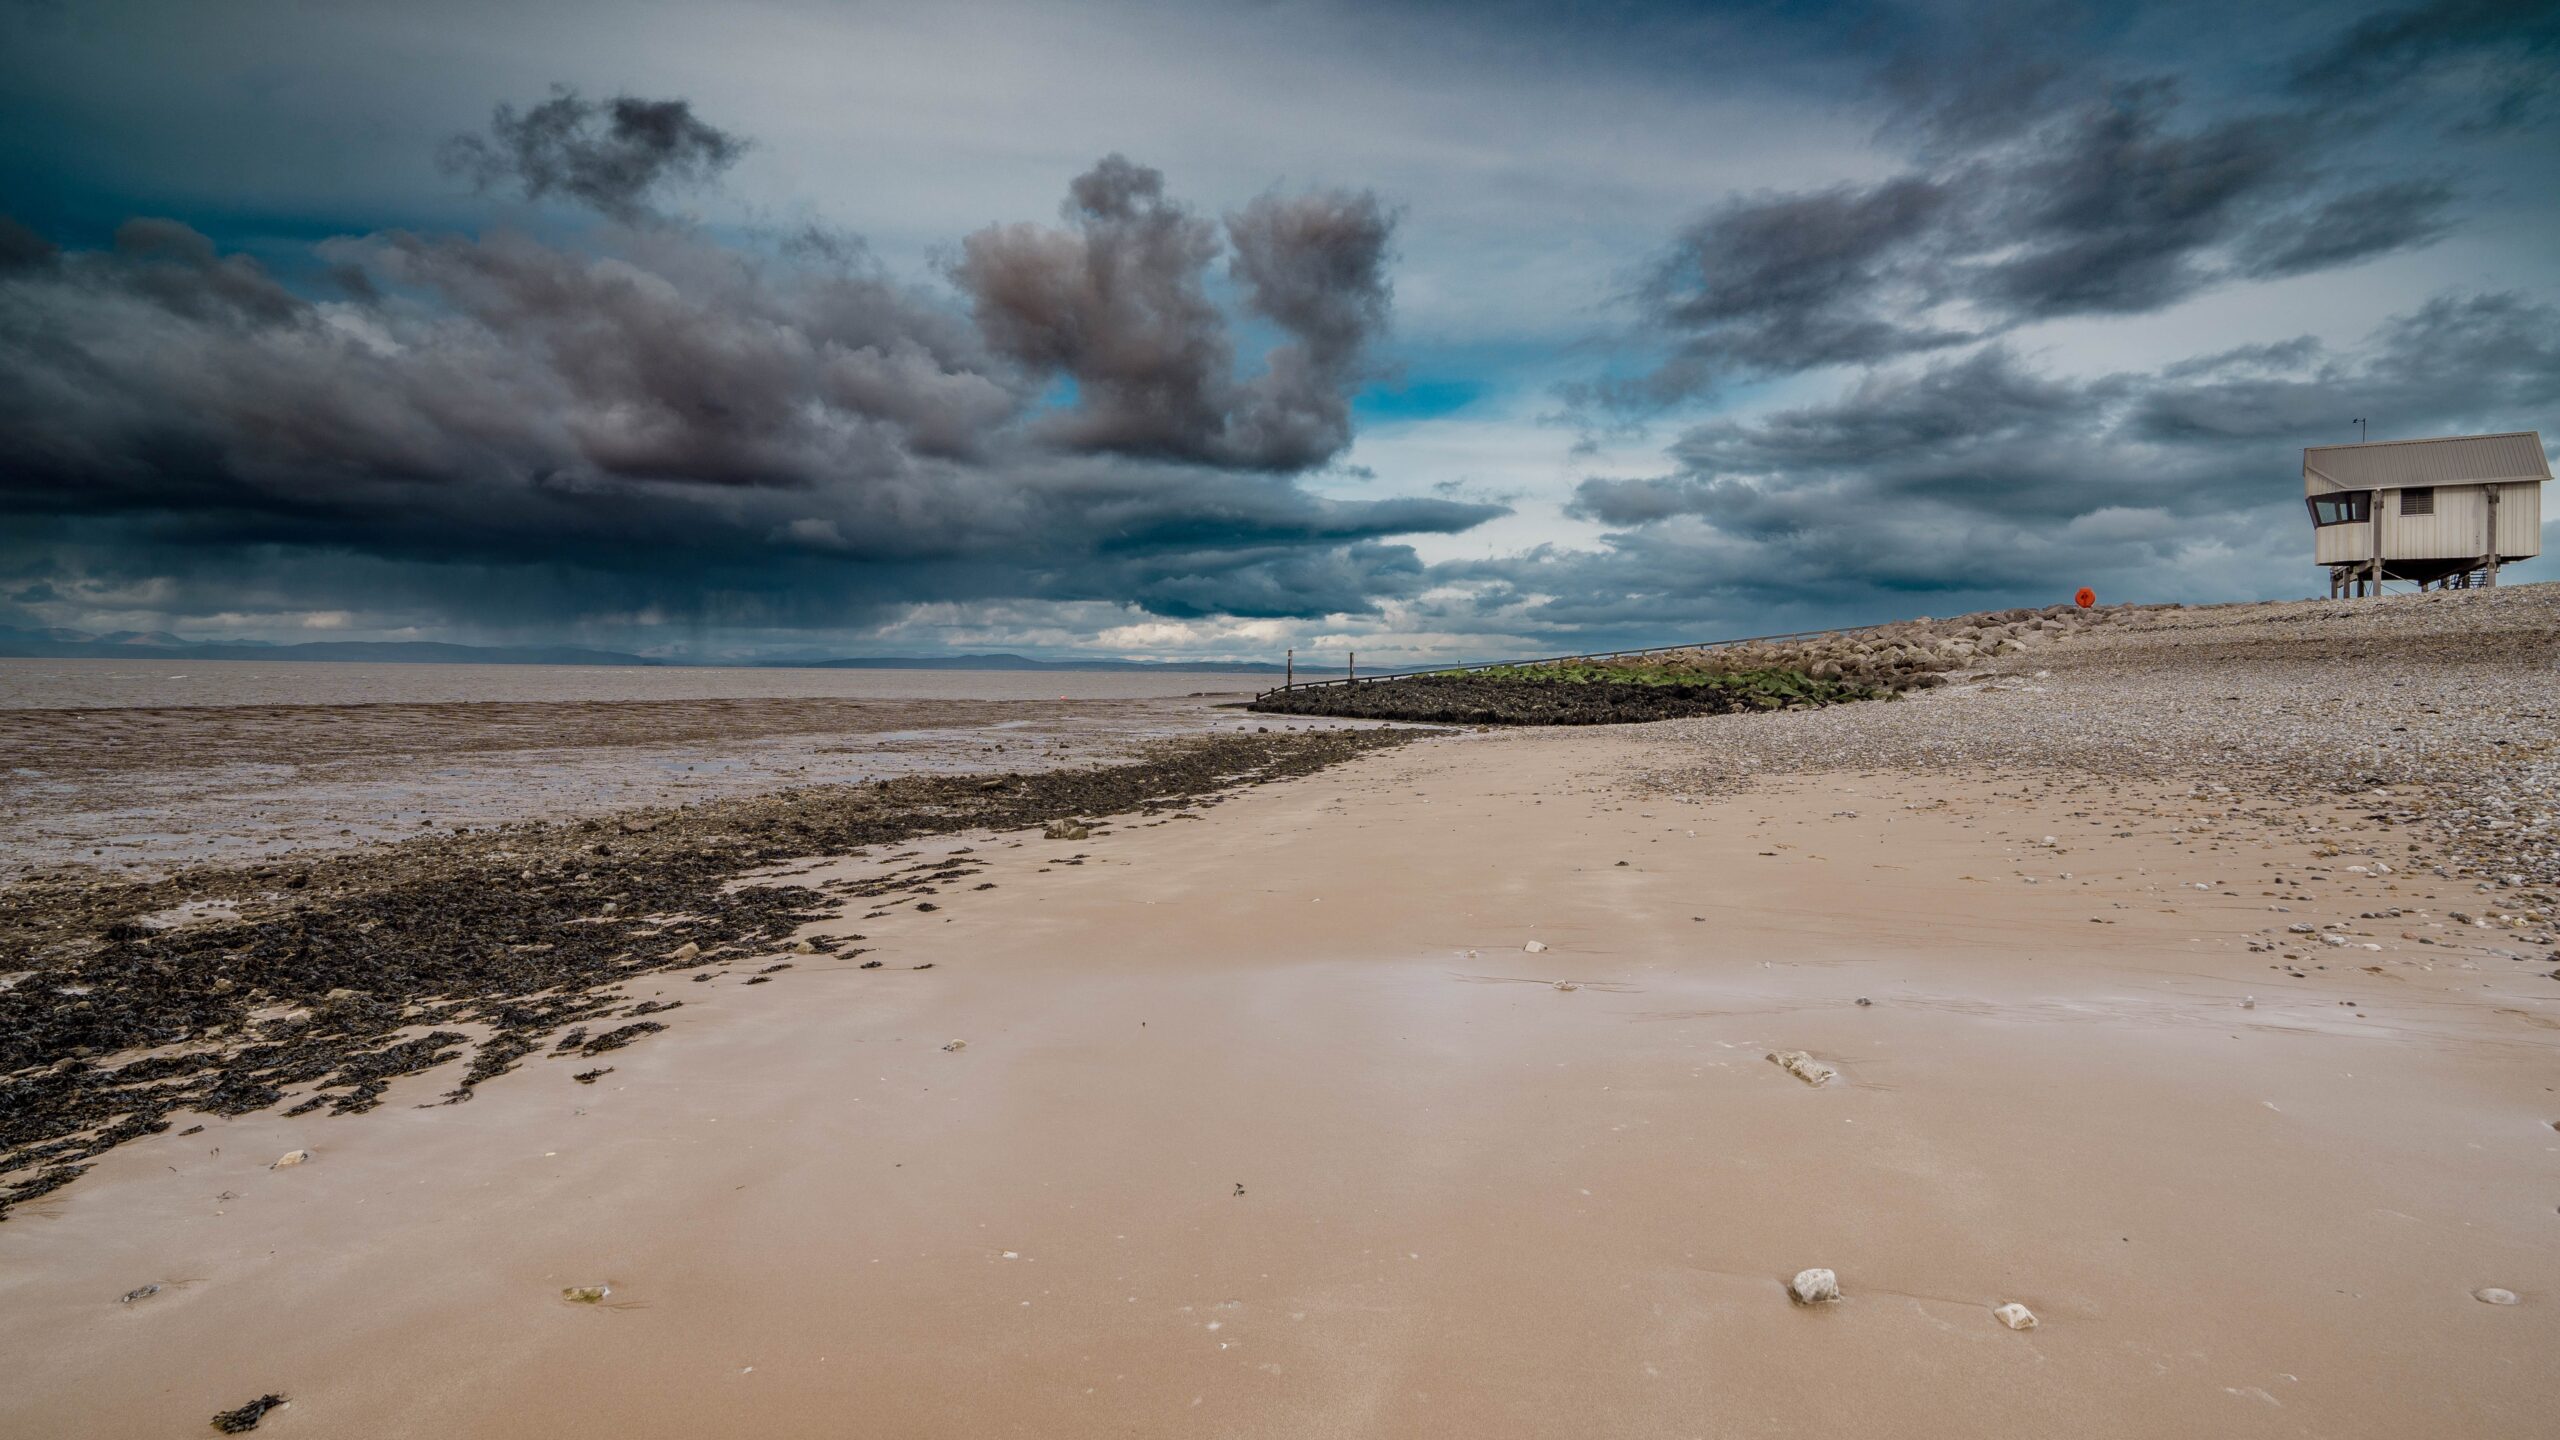 The beach at Morecambe, UK. Photo by Jonny Gios